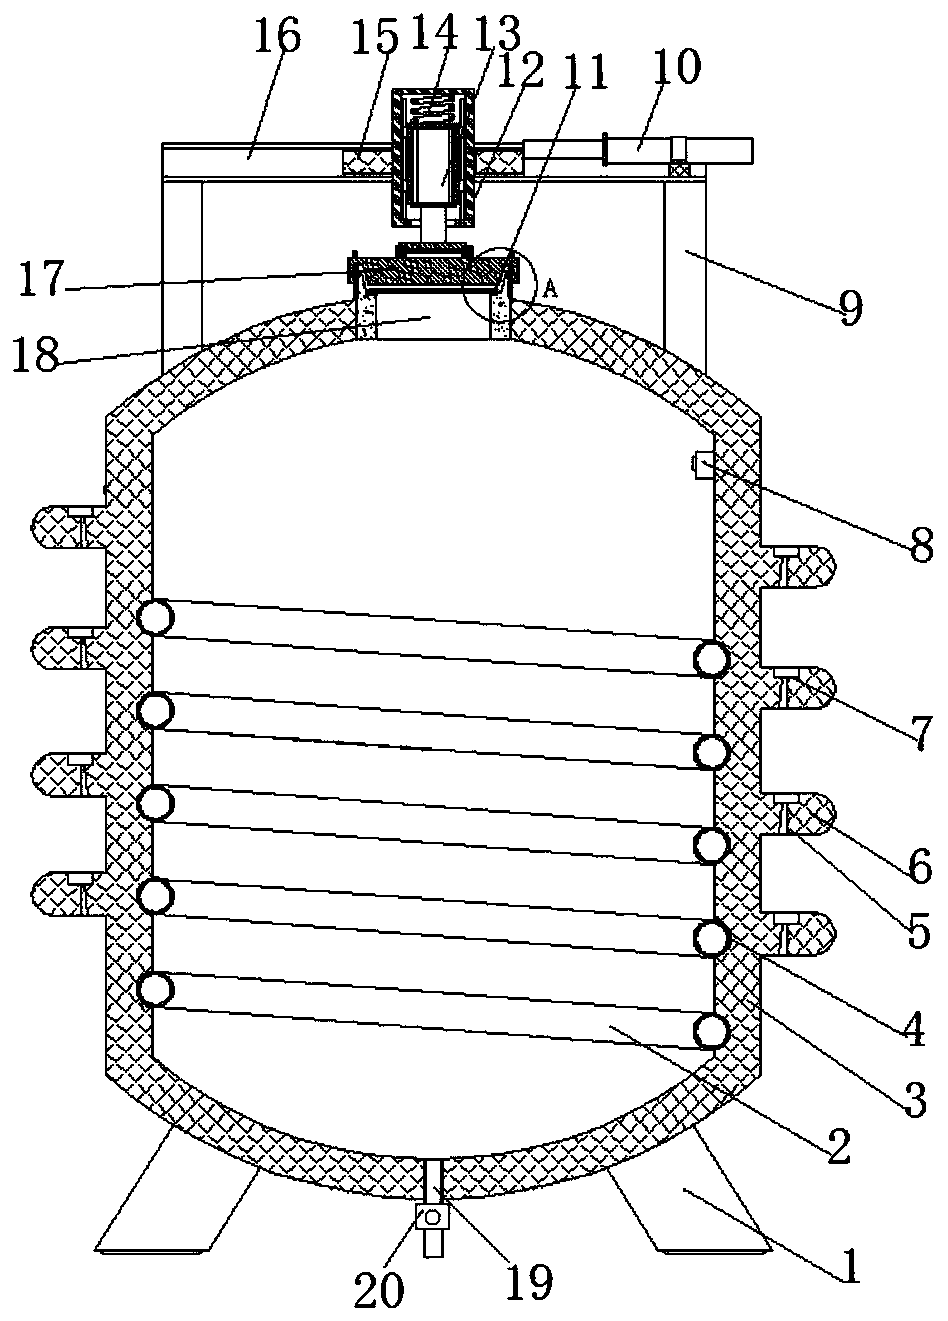 A pressure vessel for adjustable compression glass-lined equipment